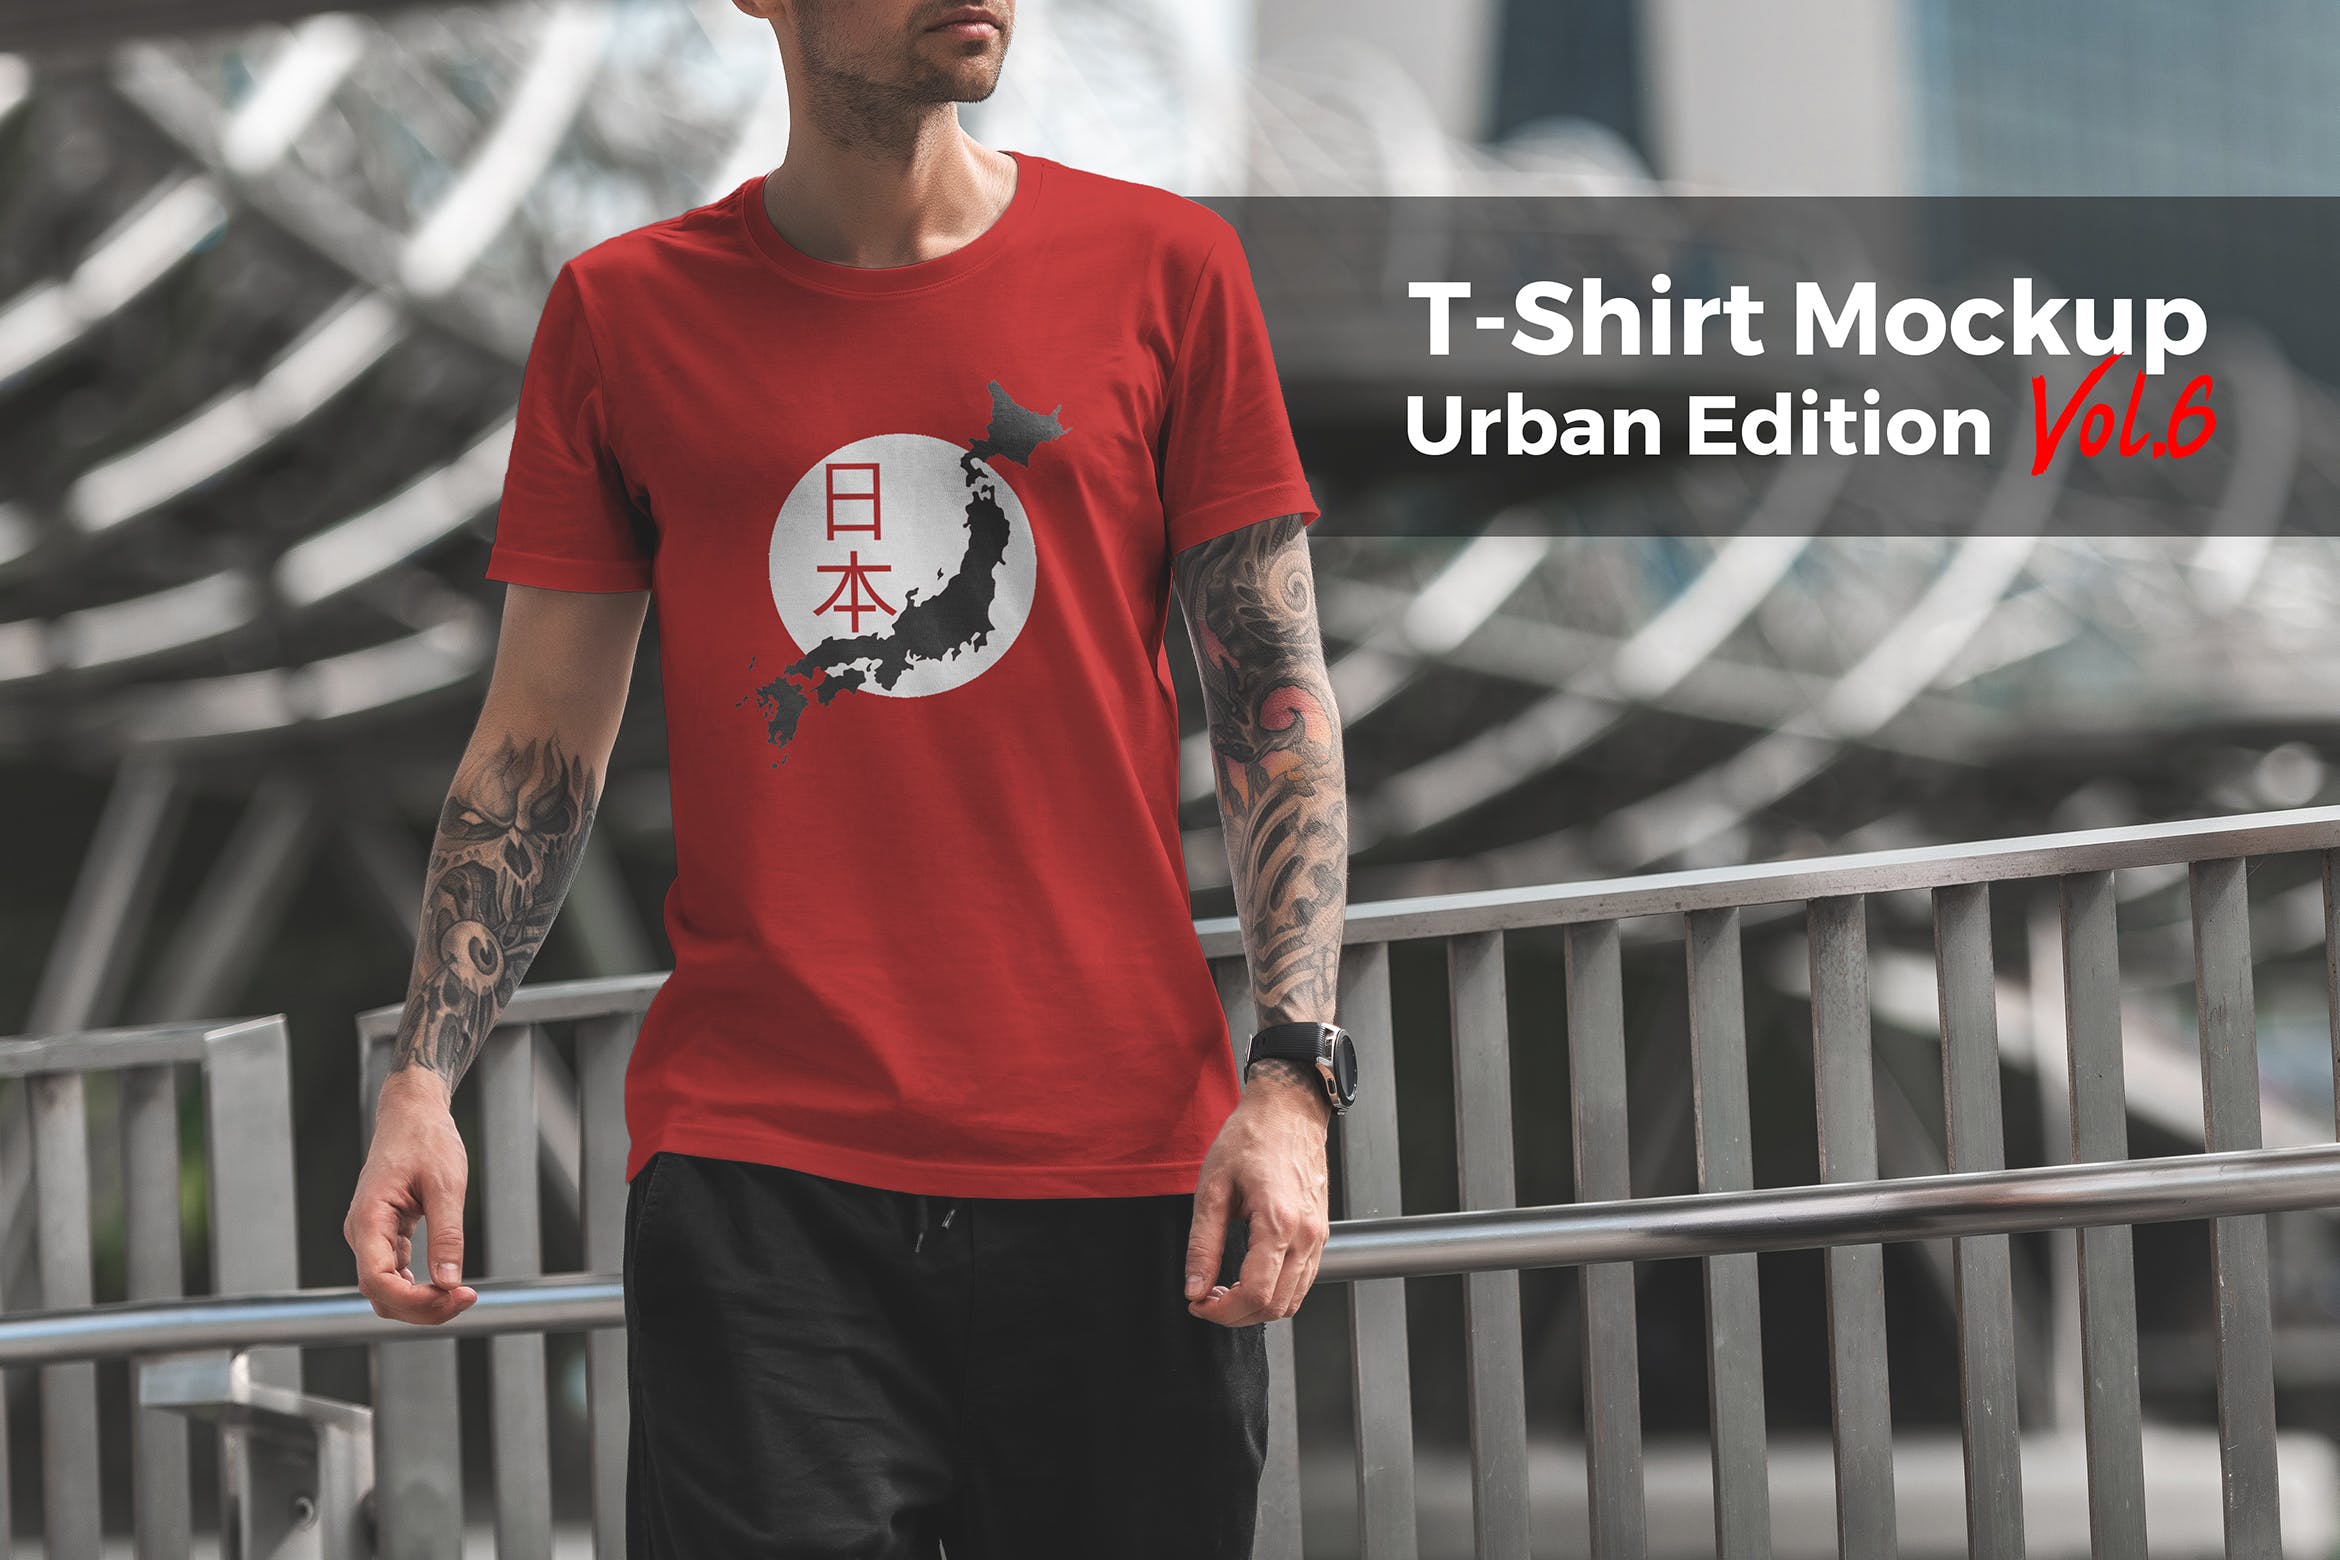 城市系列-印花T恤产品展示样机16图库精选模板v6 T-Shirt Mockup Urban Edition Vol. 6插图